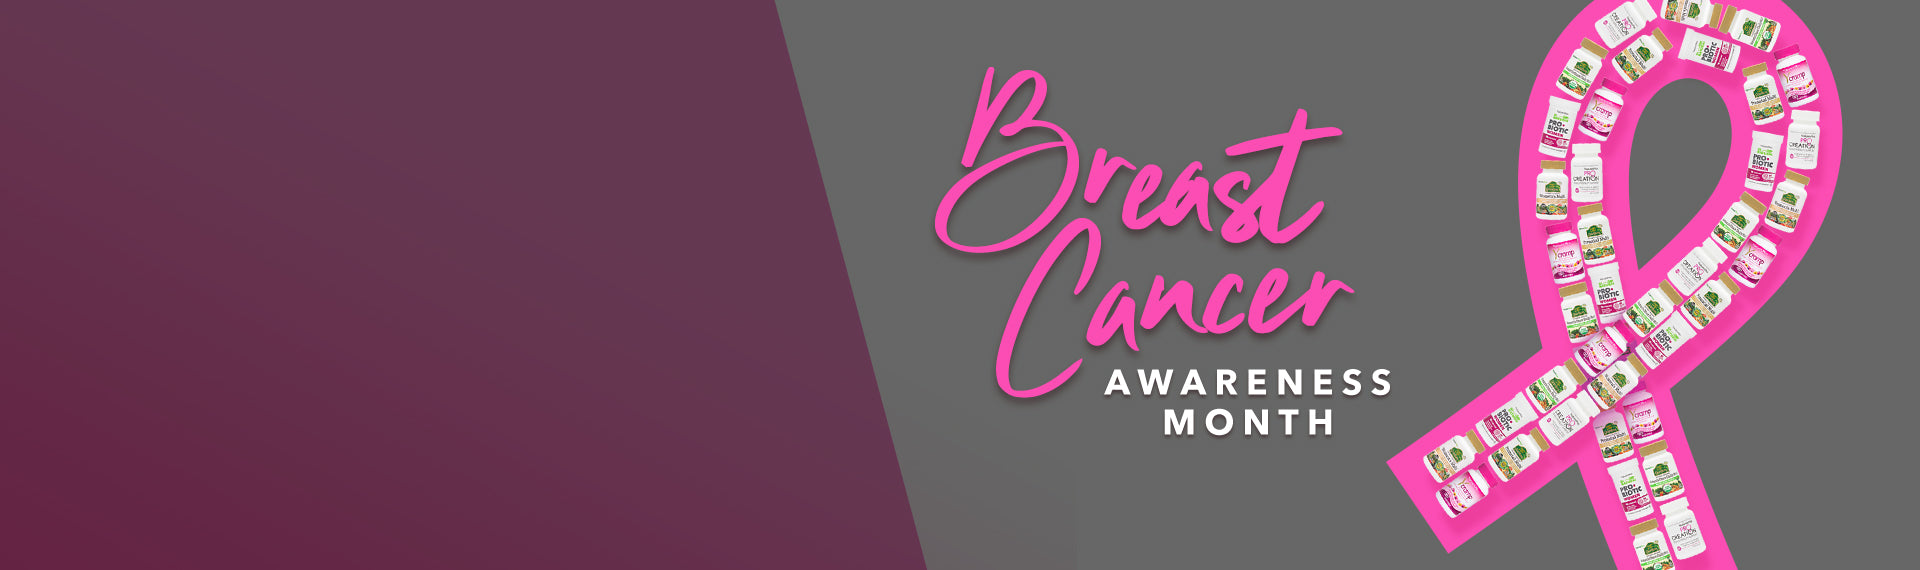 Breast Cancer awarness Banner